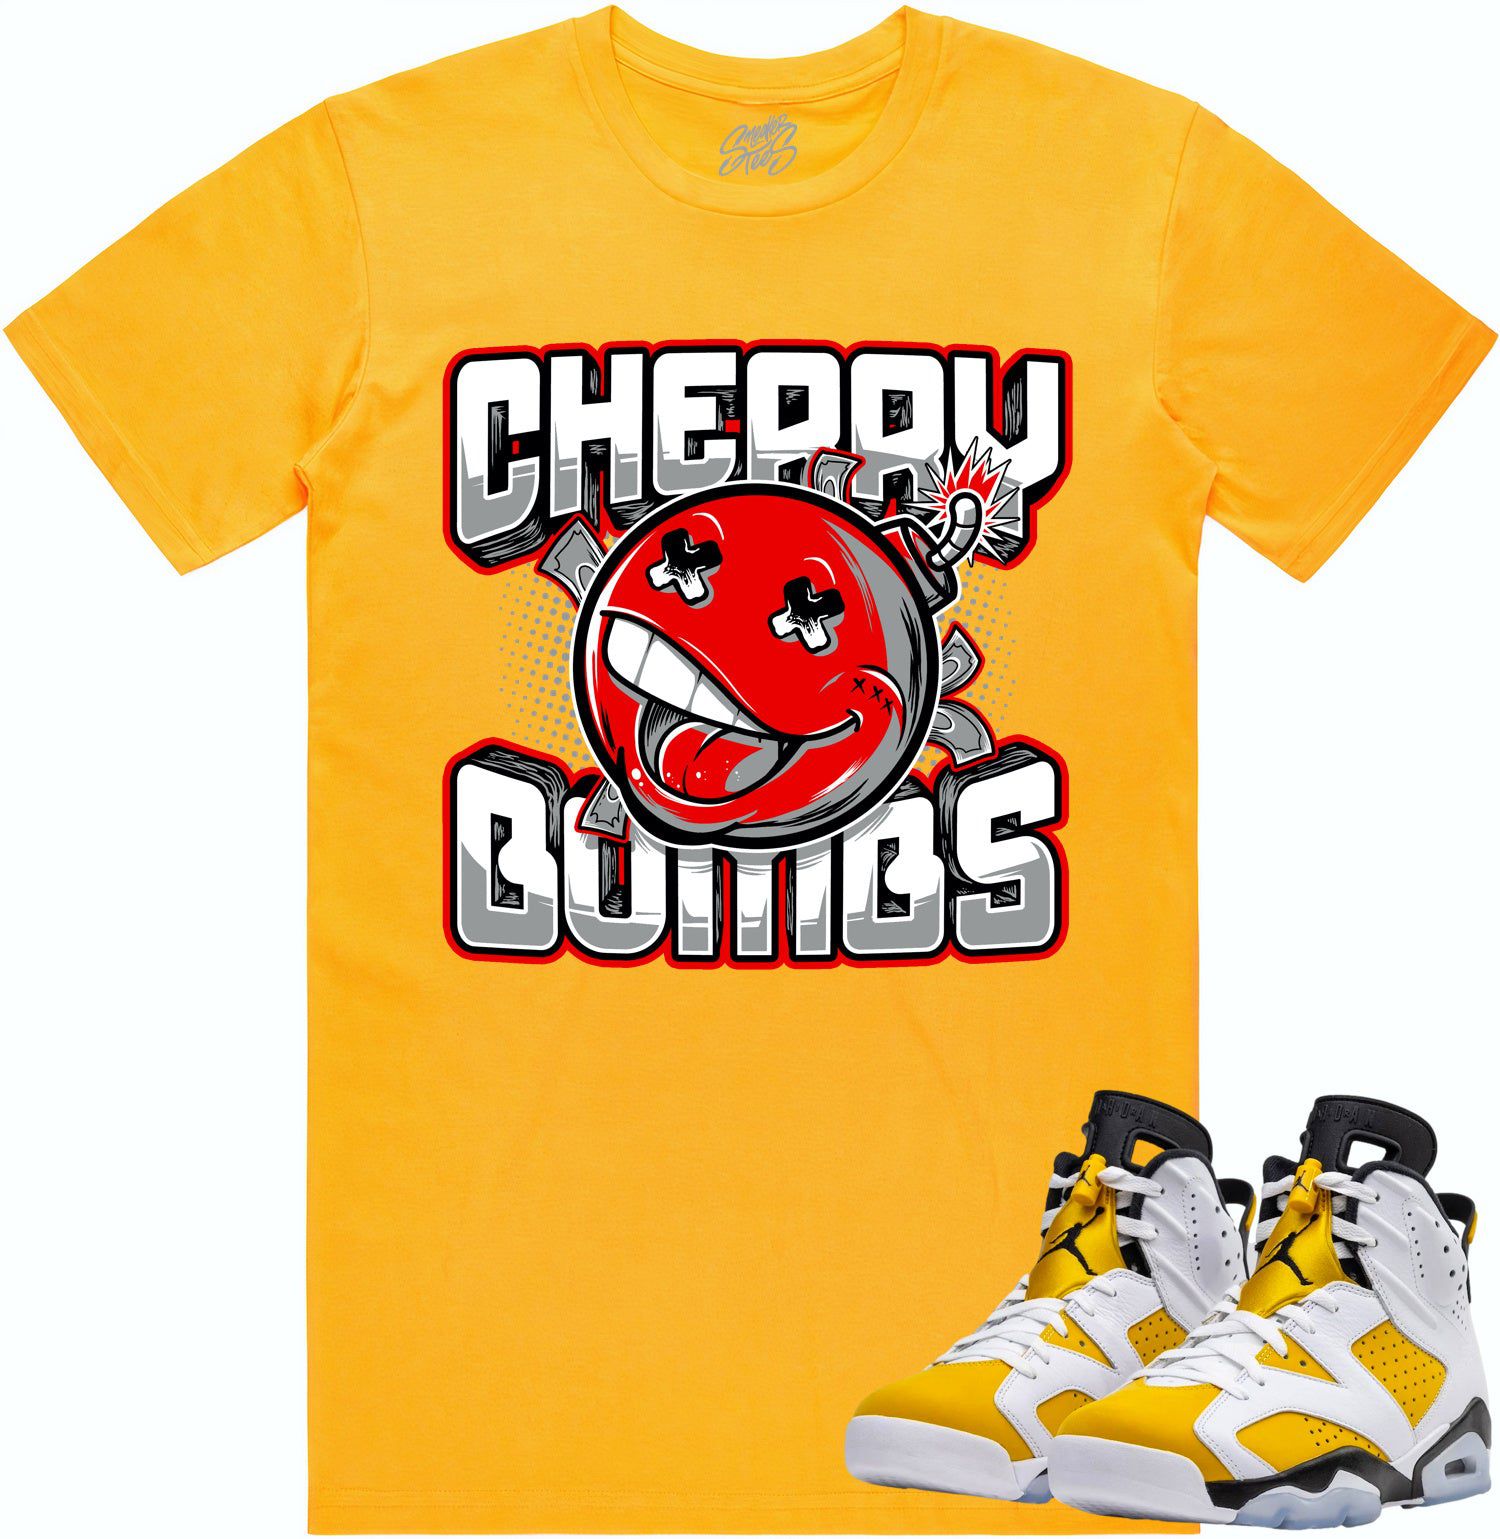 Jordan 6 Yellow Ochre 6s Shirt to Match - RED CHERRY BOMBS